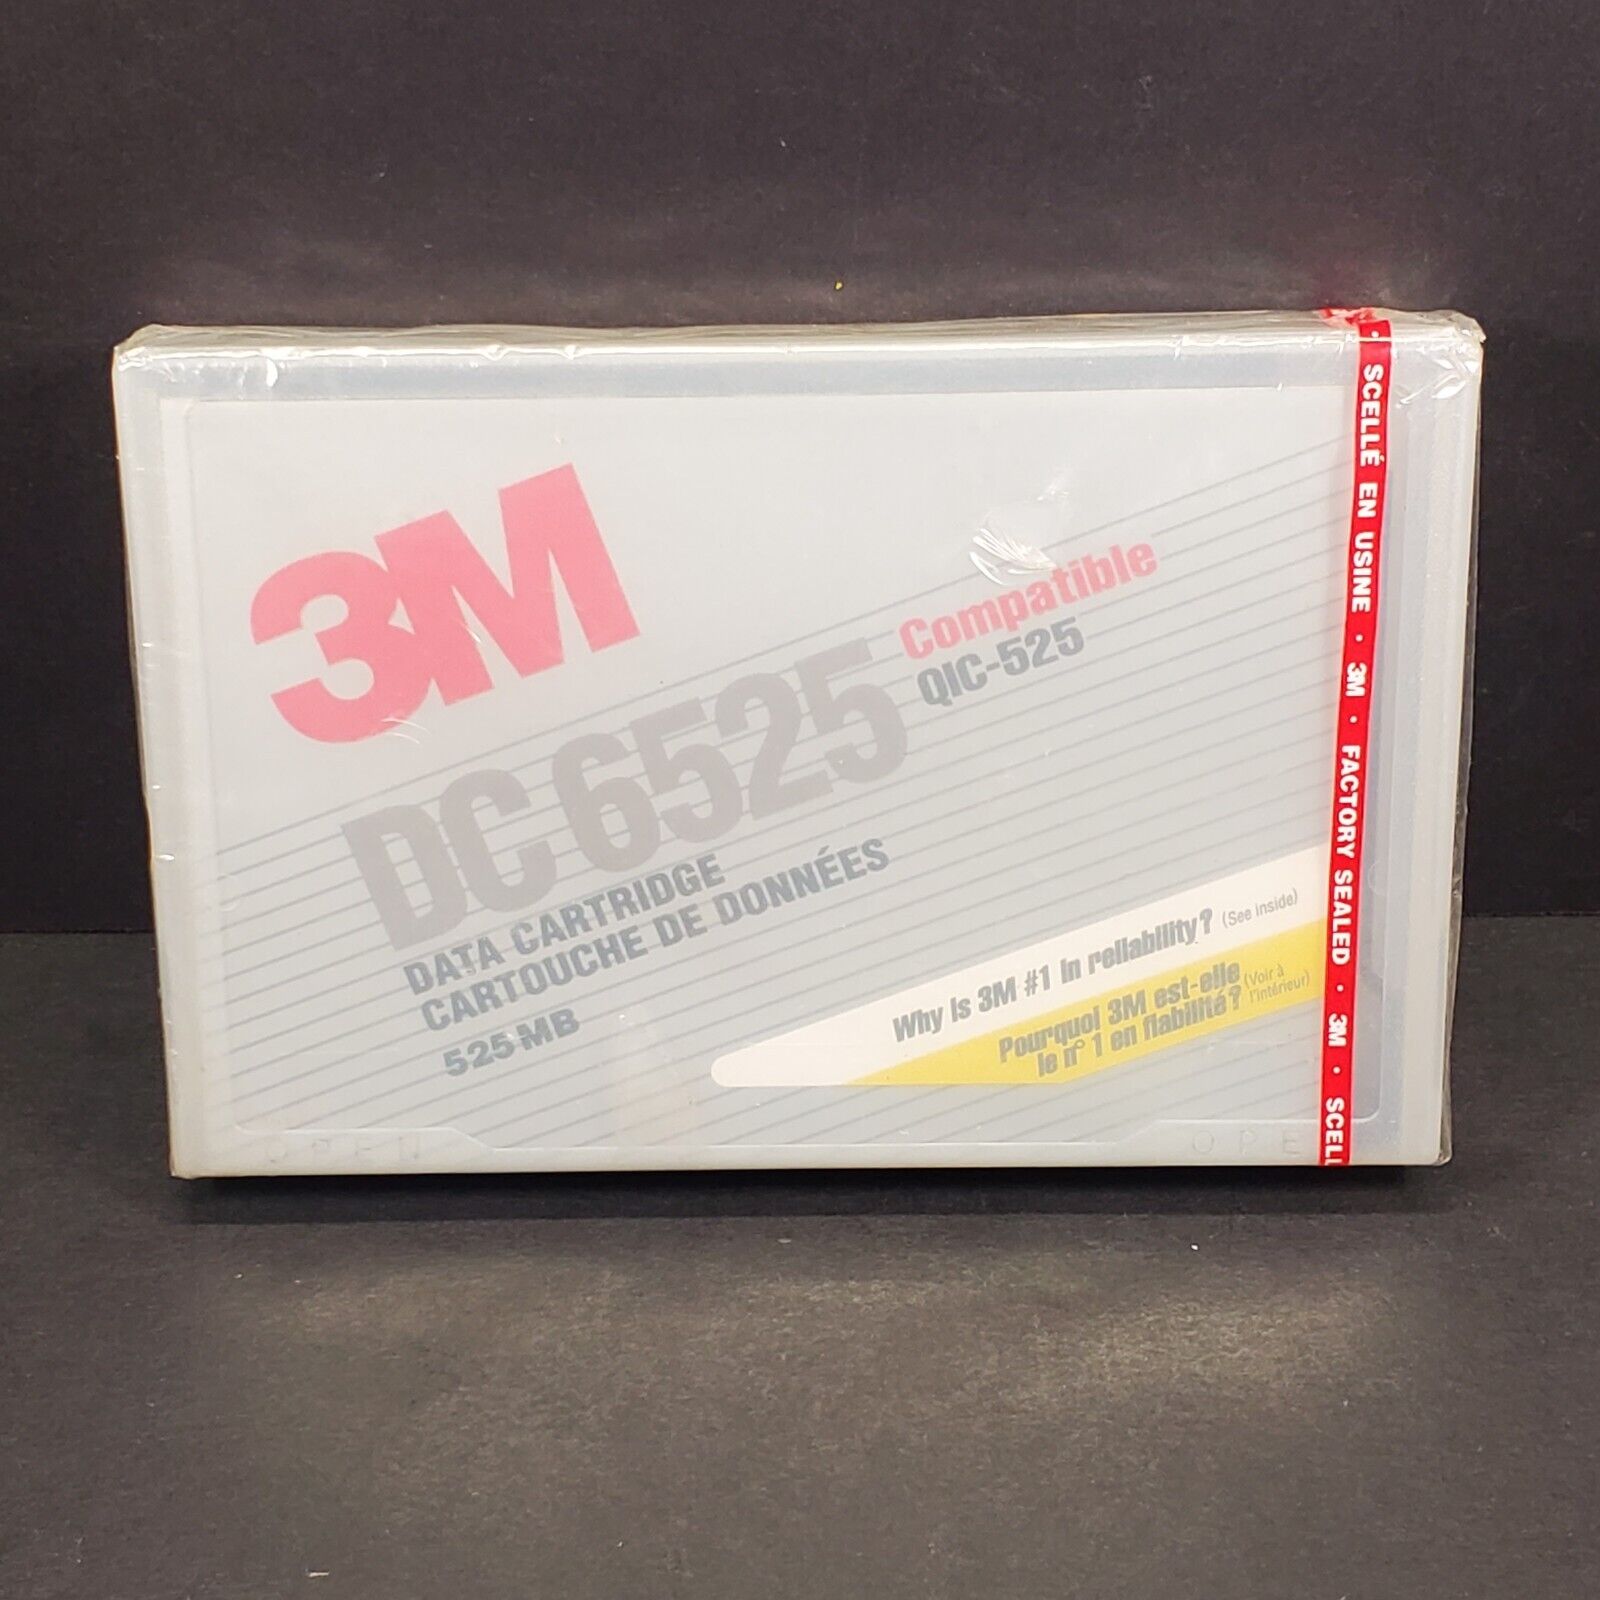 3M DC 6525 525mb Data Cartridge QIC-525 Compatible - Sealed NOS.